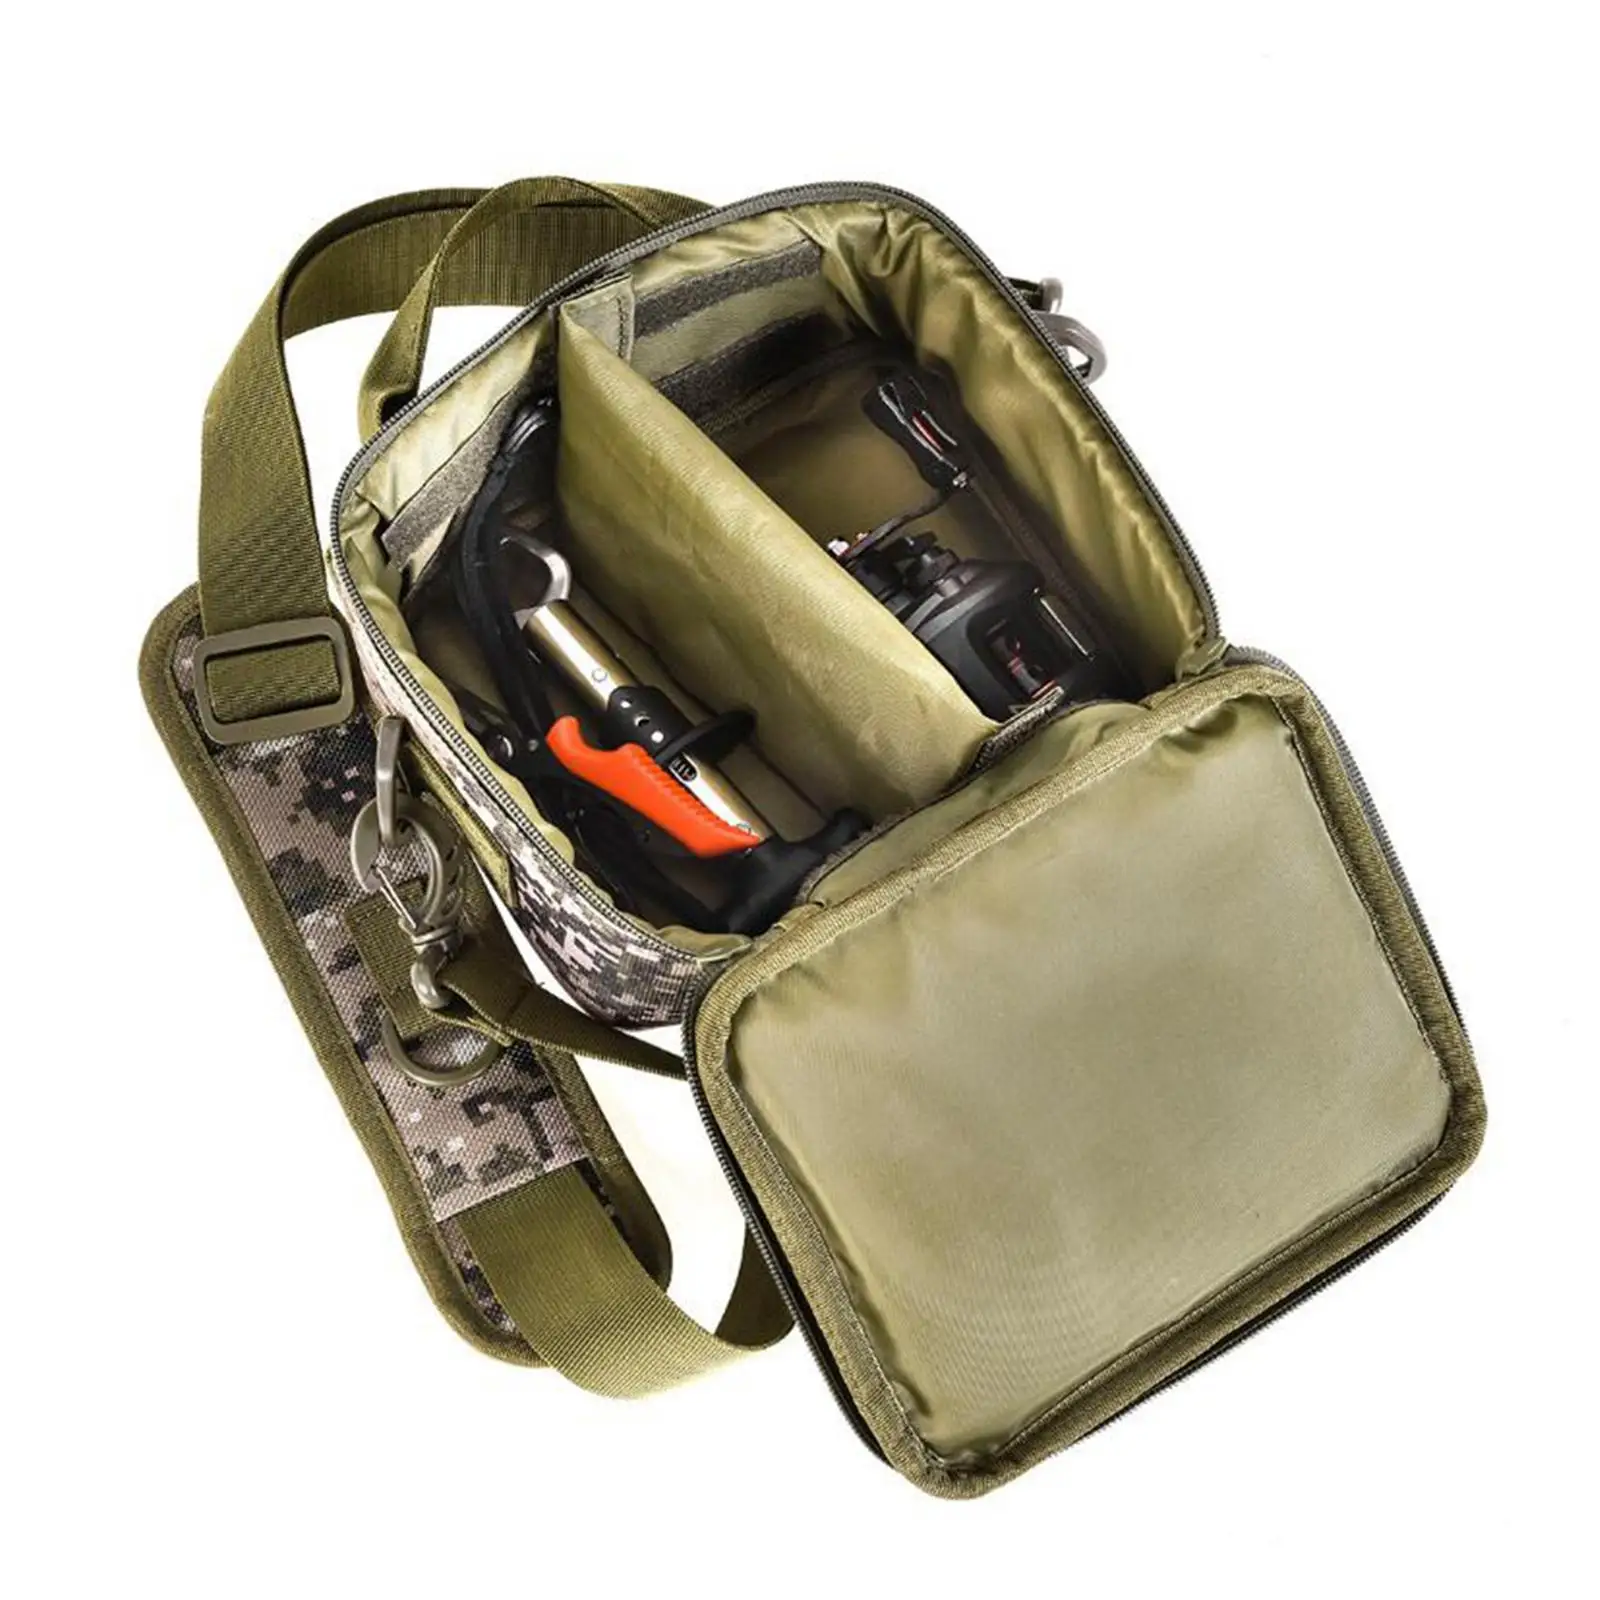 Fishing Reel Storage Bag Waterproof with Adjustable Shoulder Strap Oxford Cloth